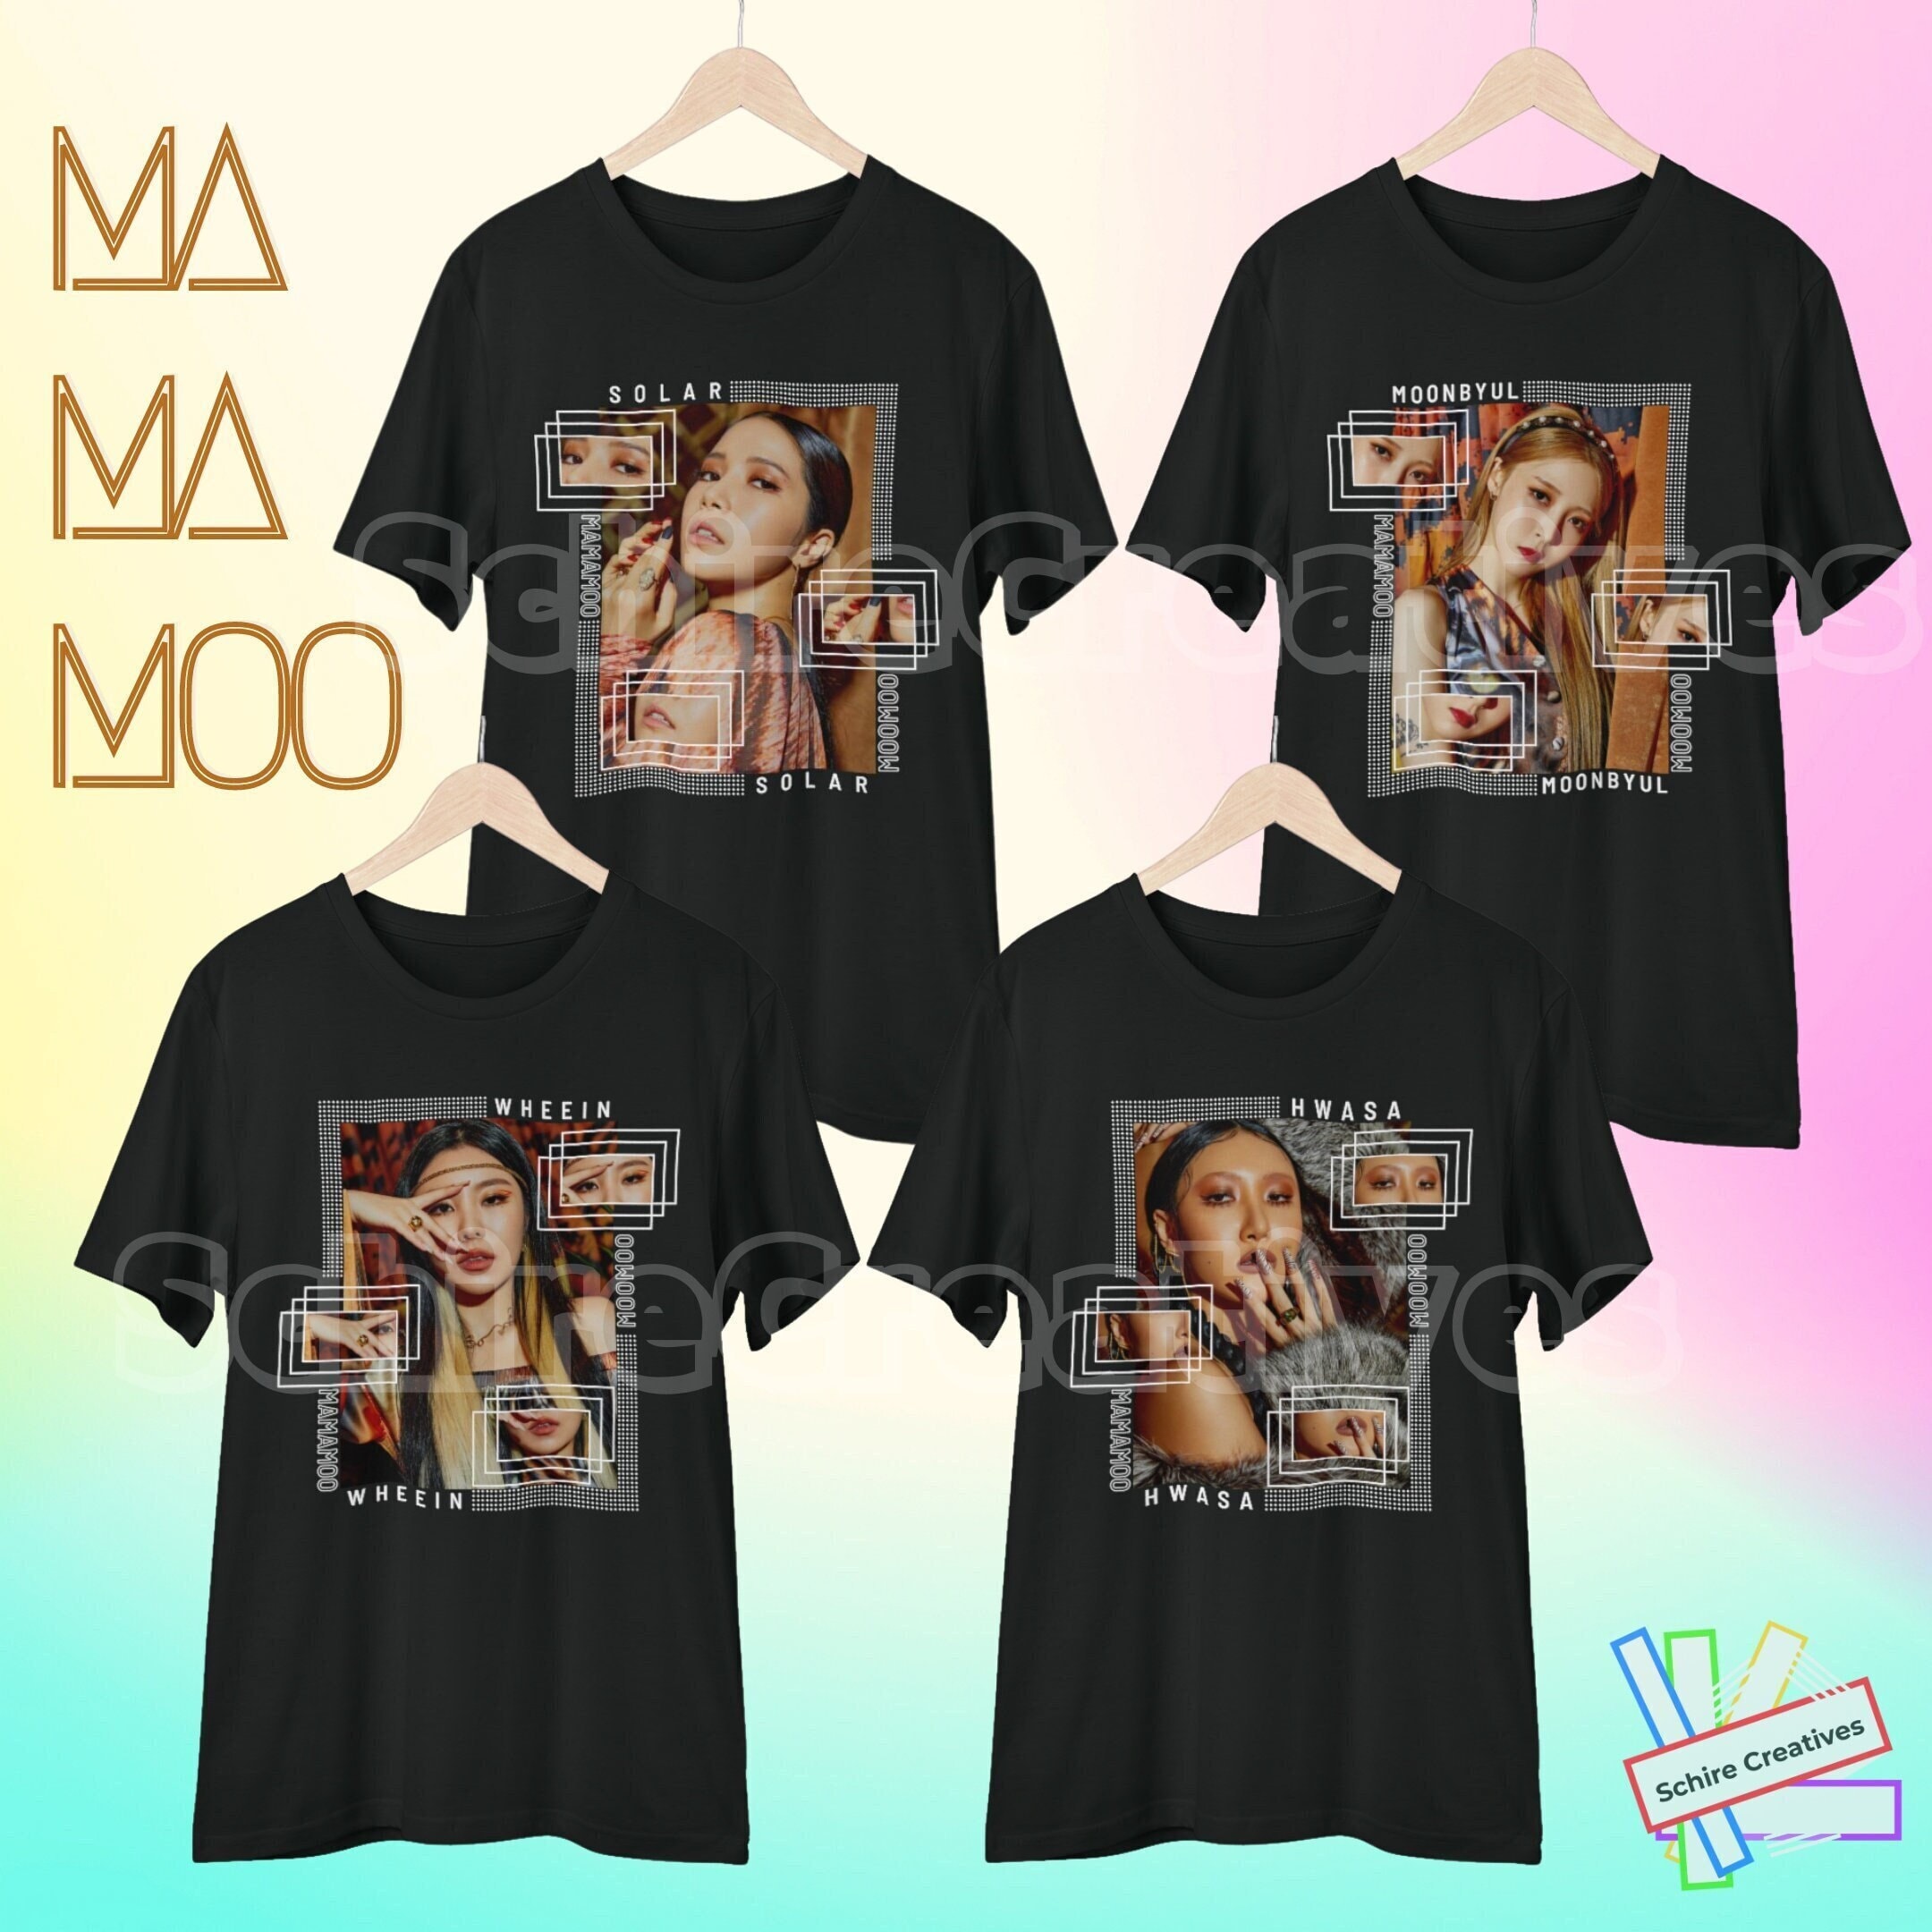 Kpop MAMAMOO T-Shirt New Fashion Tshirt Women Men Tee Tops Hwasa Moonbyul Solar